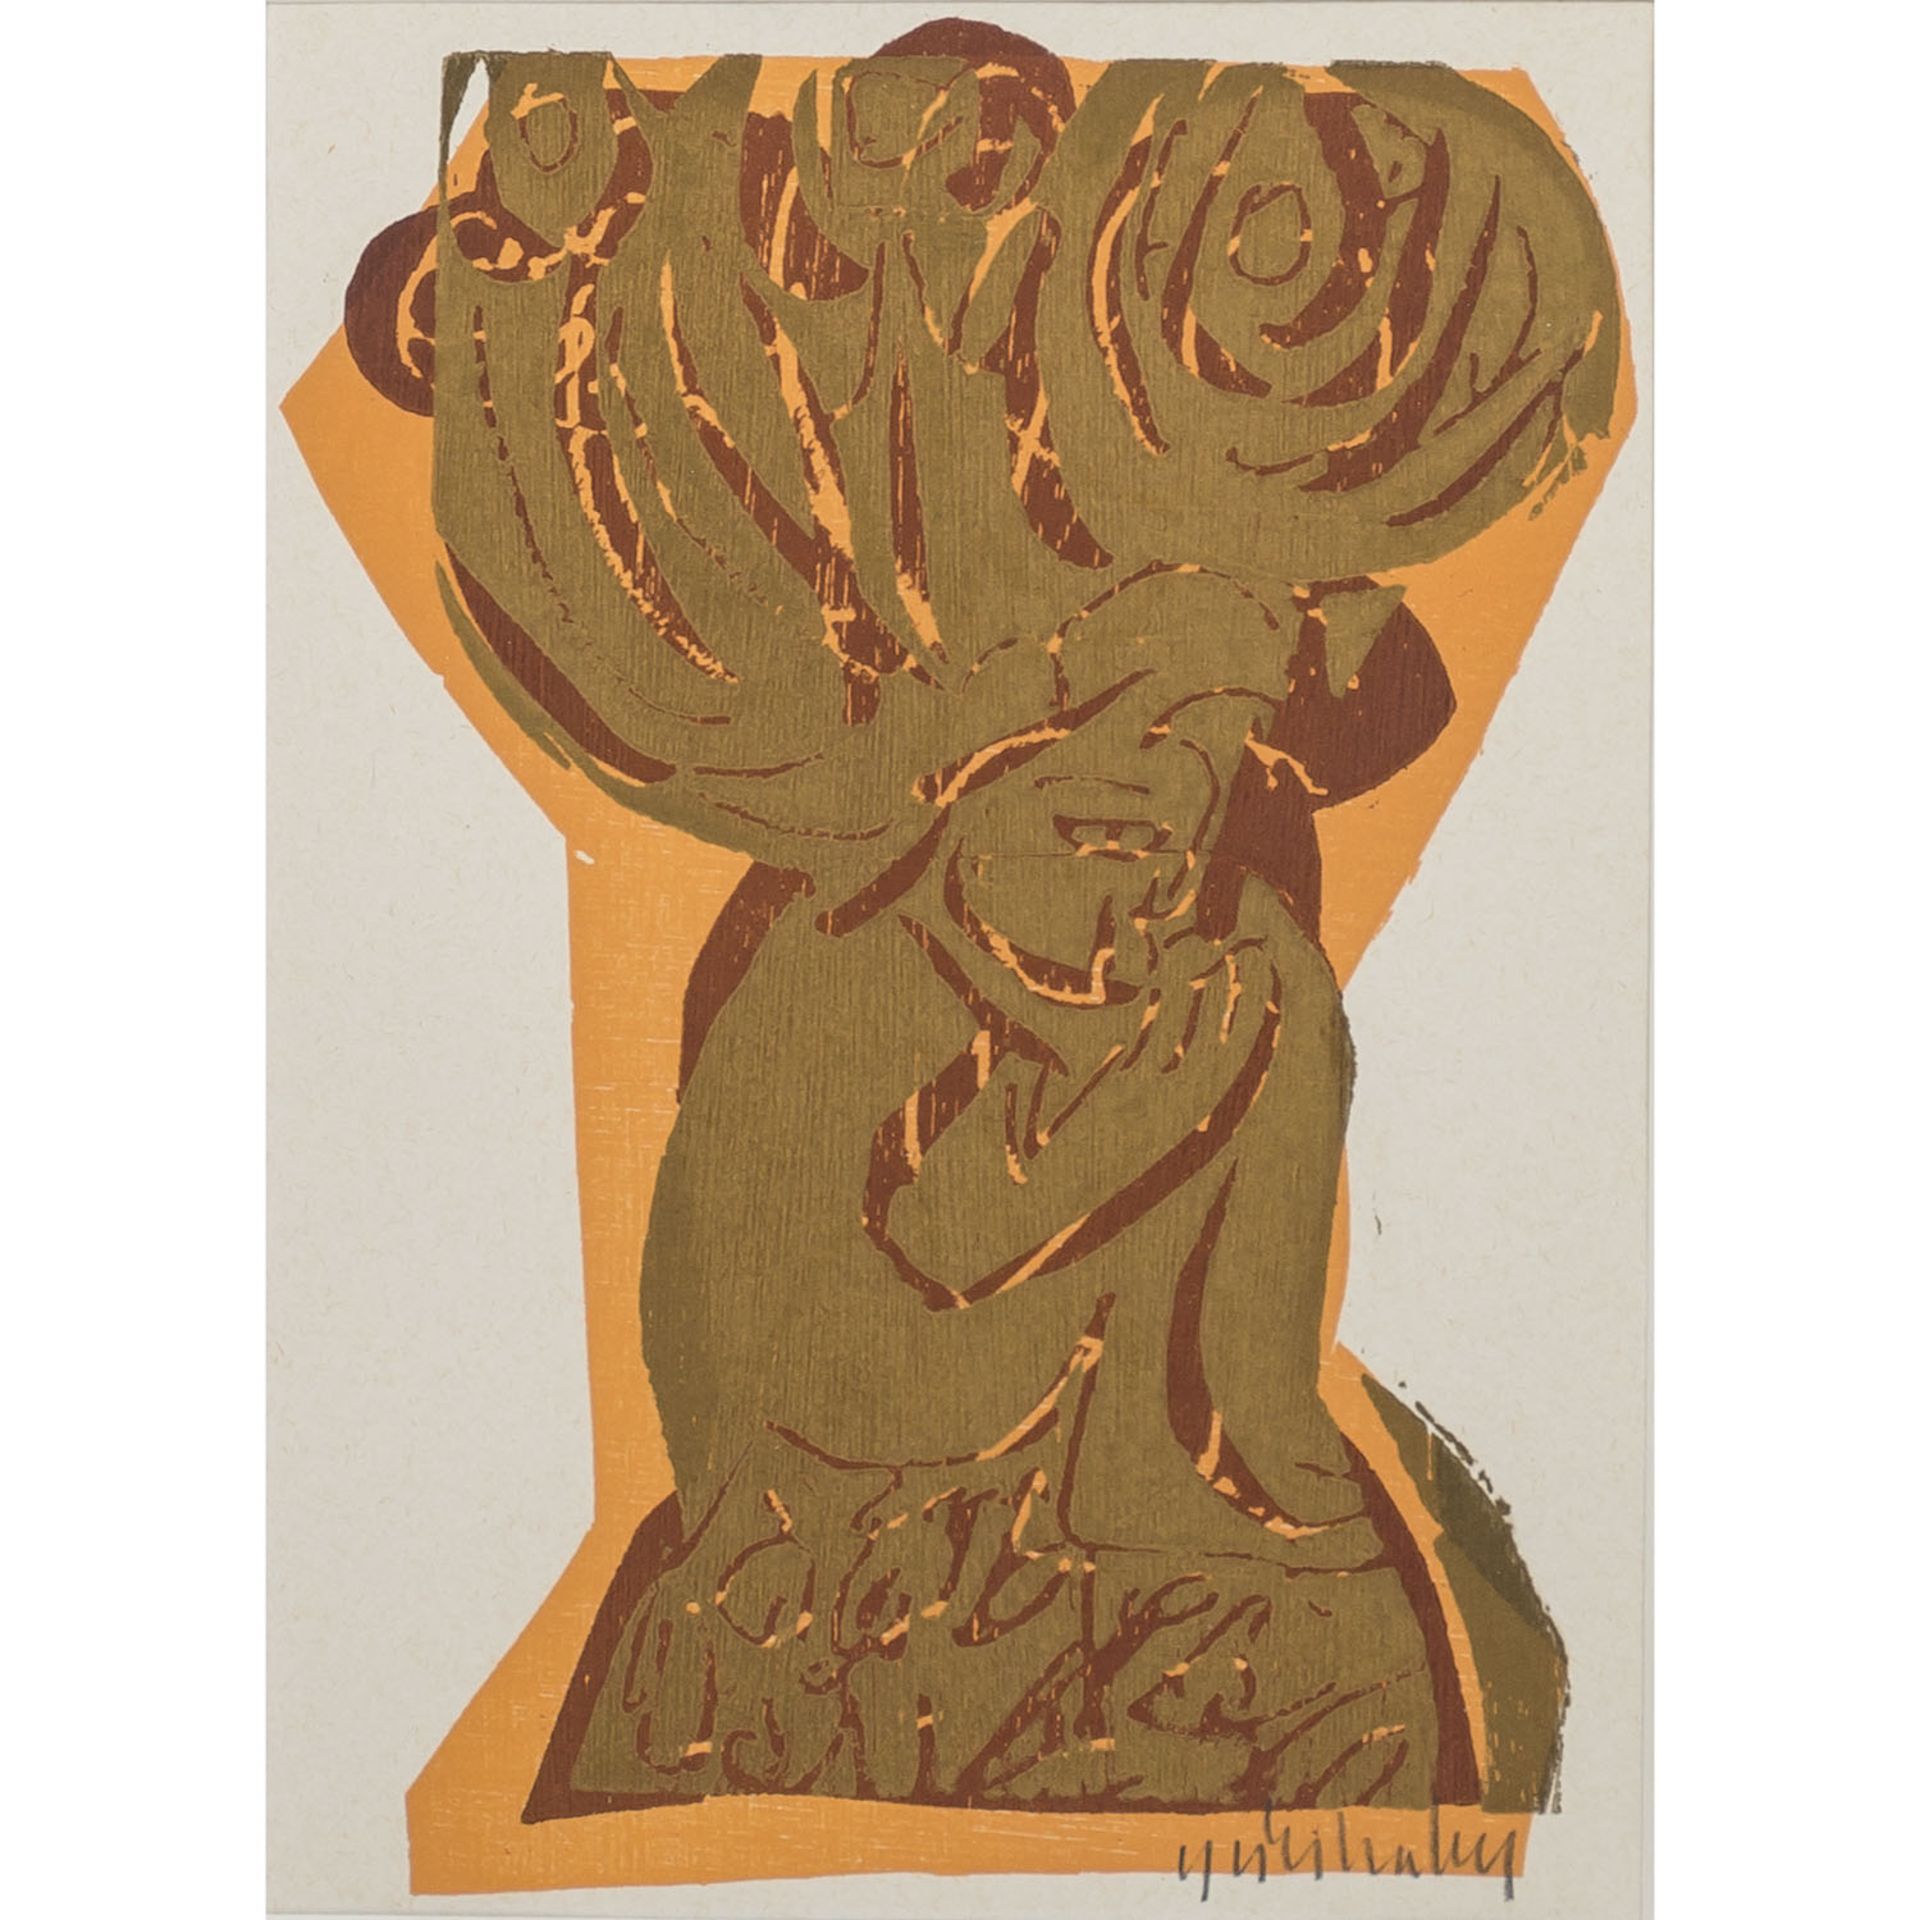 GRIESHABER, HAP (Helmut Andreas Paul, 1909-1981), "Engel unter einem Baum",